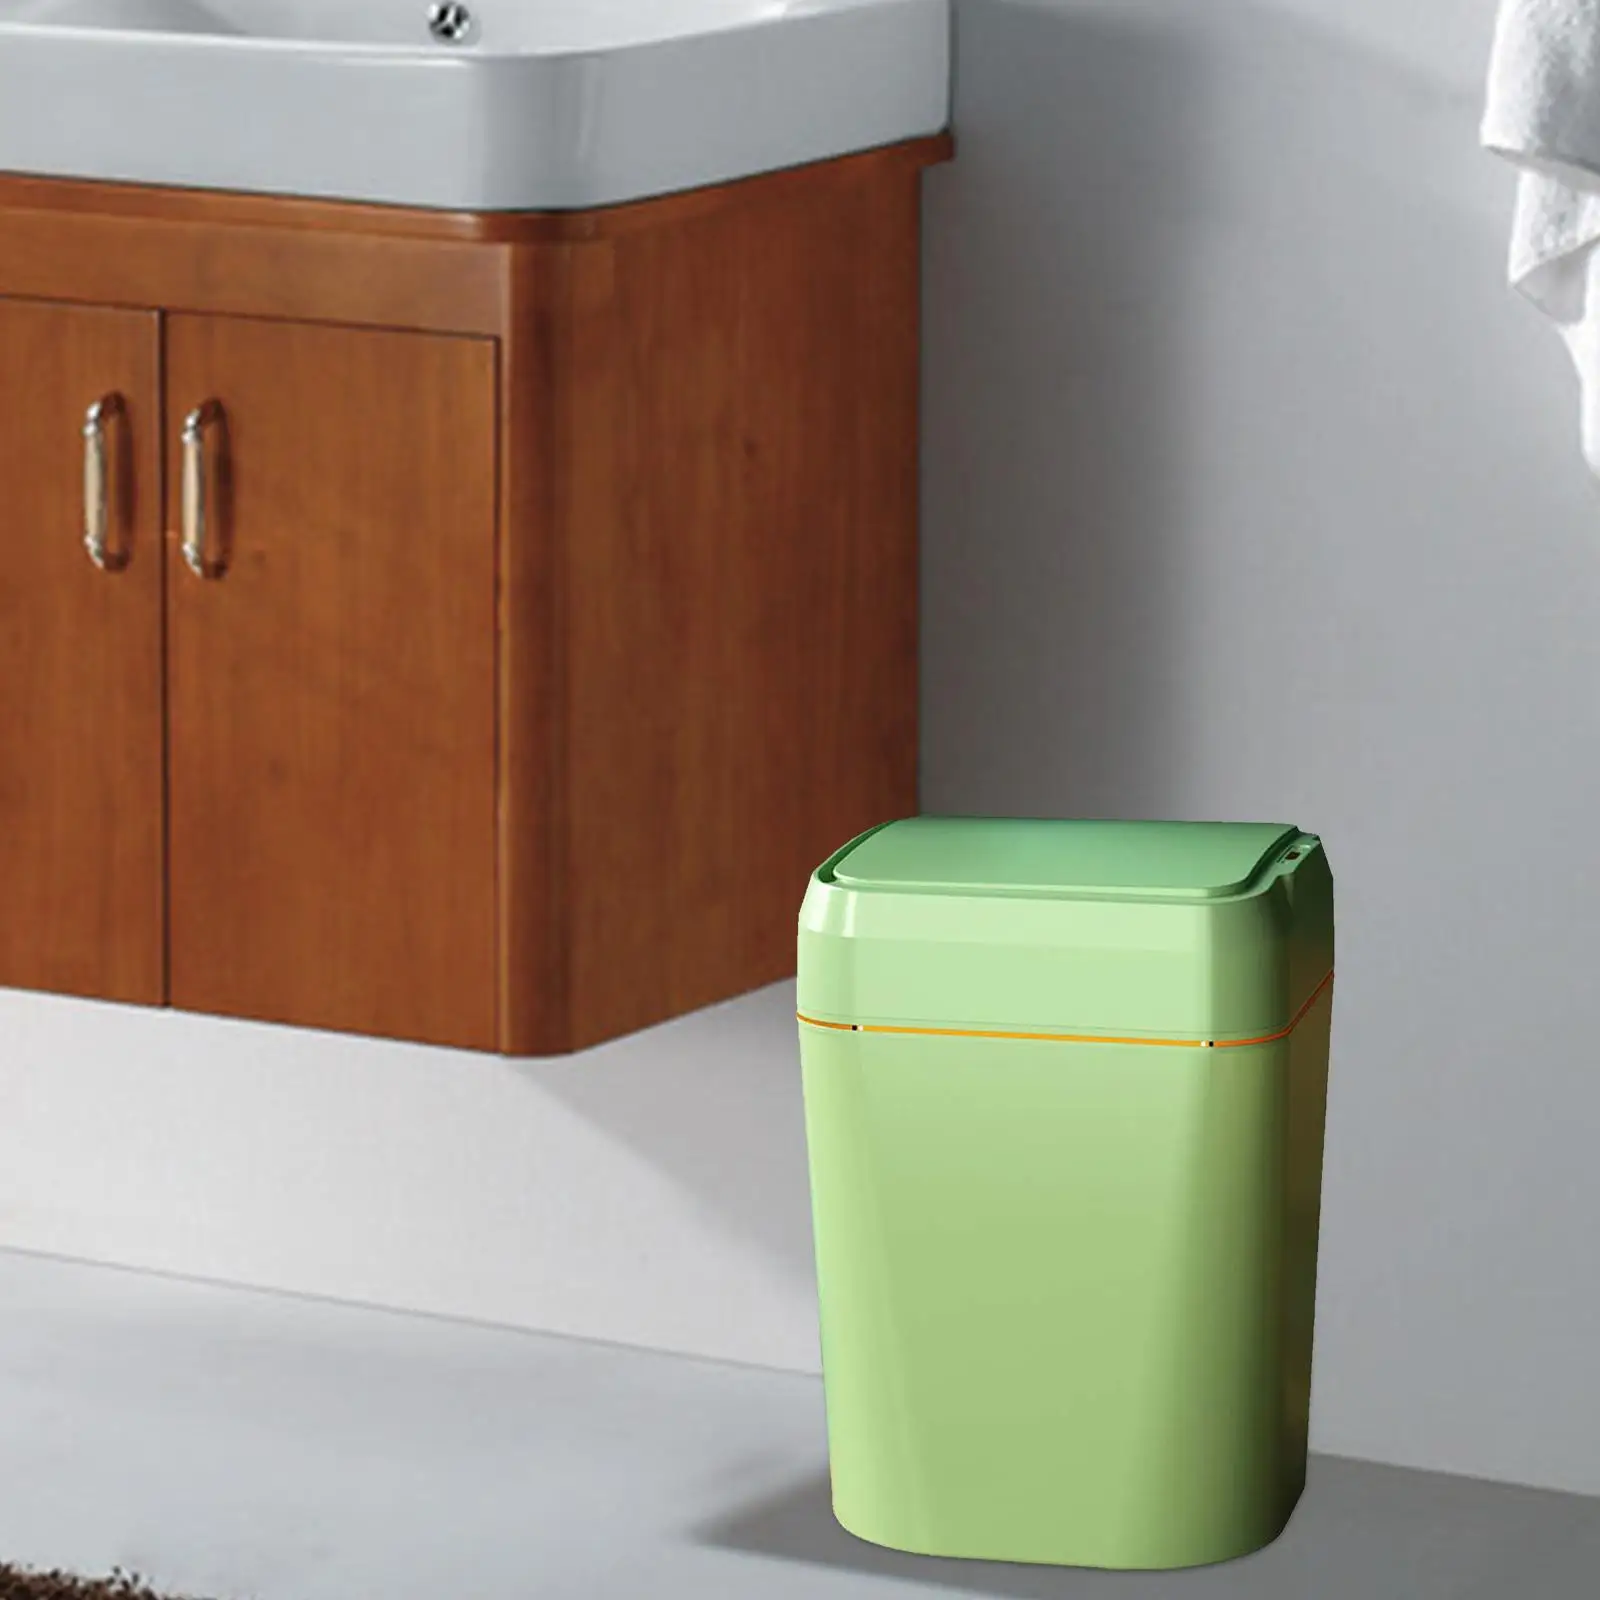 Electric Garbage Bin Waterproof with Lid Toilet Intelligent Induction Trash Bin for Bathroom Office Kitchen Outdoor Living Room